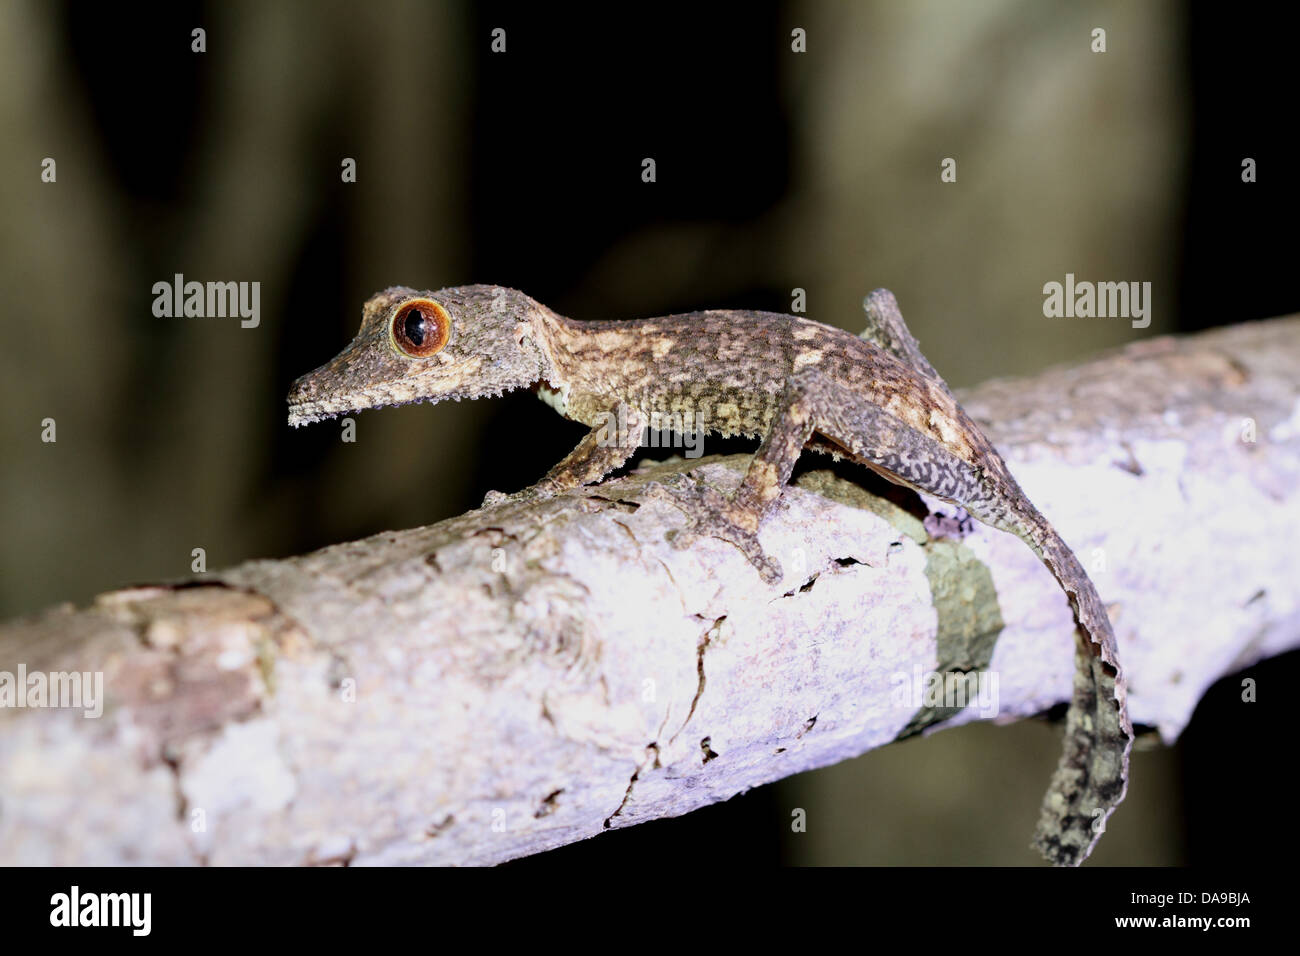 Tier, Reptil, Blatt-Tail Gecko, Blatt-tailed Gecko, Gecko, nachtaktiv, Seitenansicht, Seitenansicht, Ankarana, trocken, Laub-, Wald Stockfoto